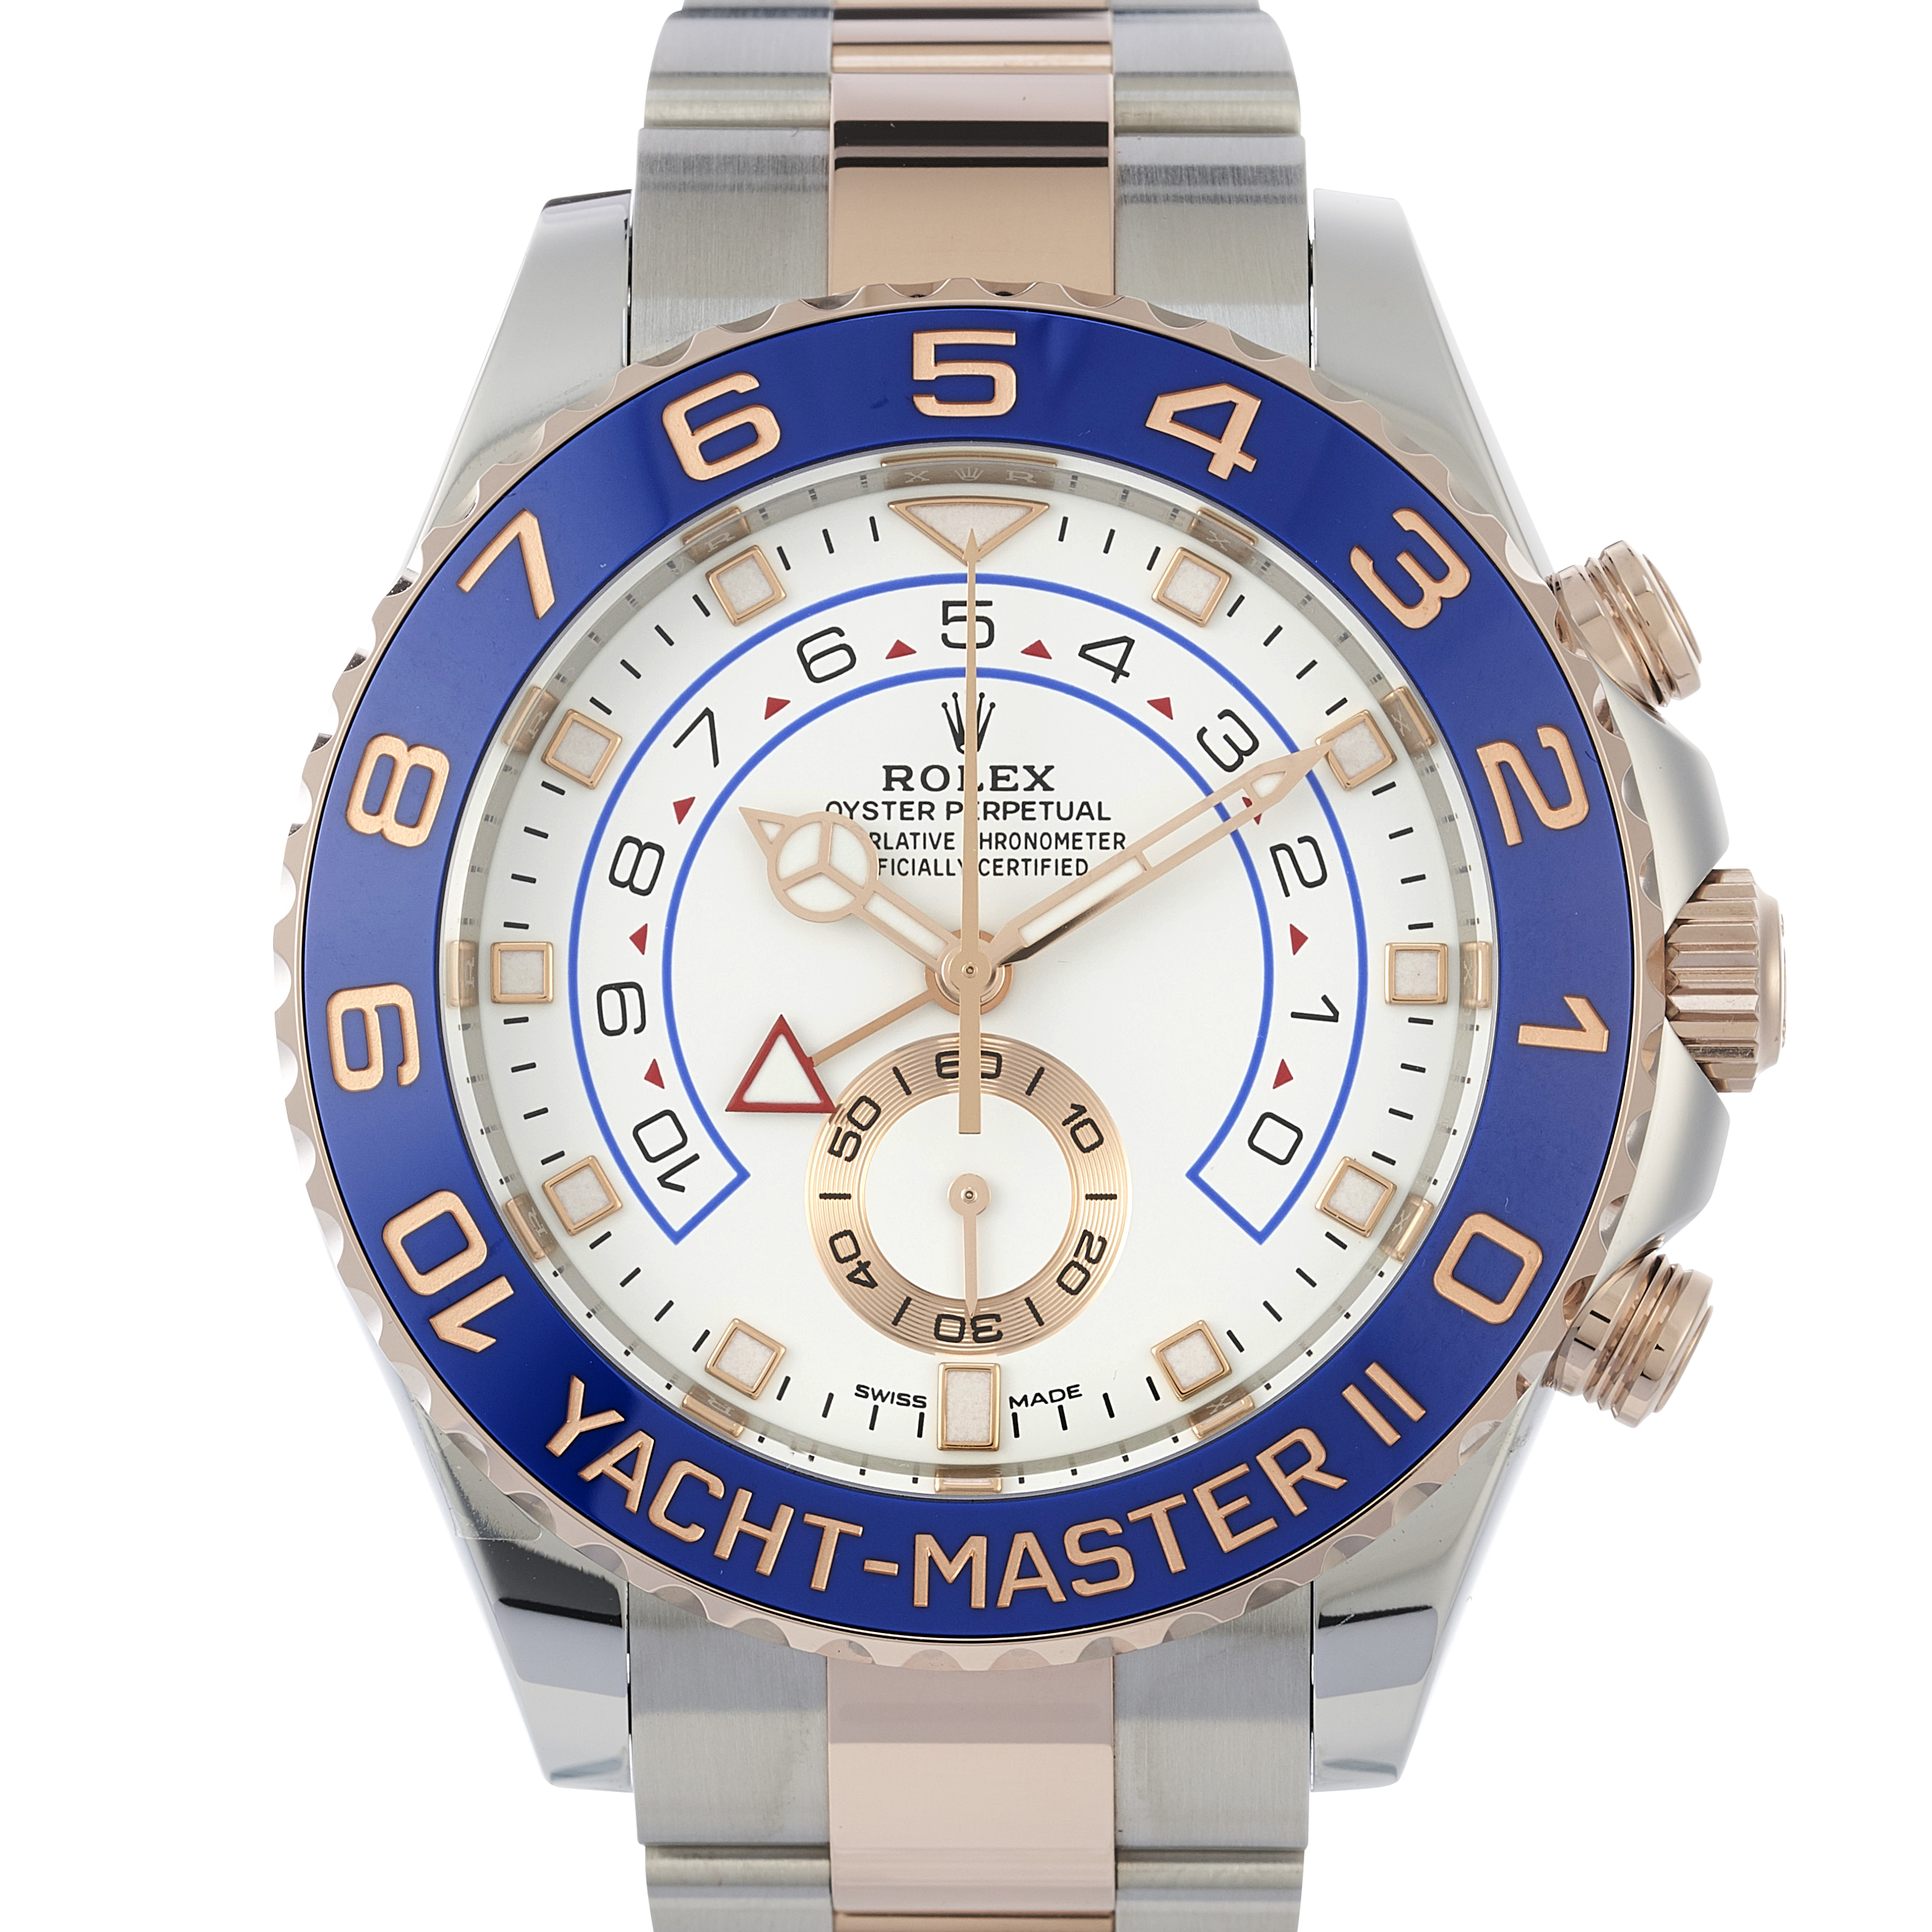 Rolex Yacht-Master II 116681 in 